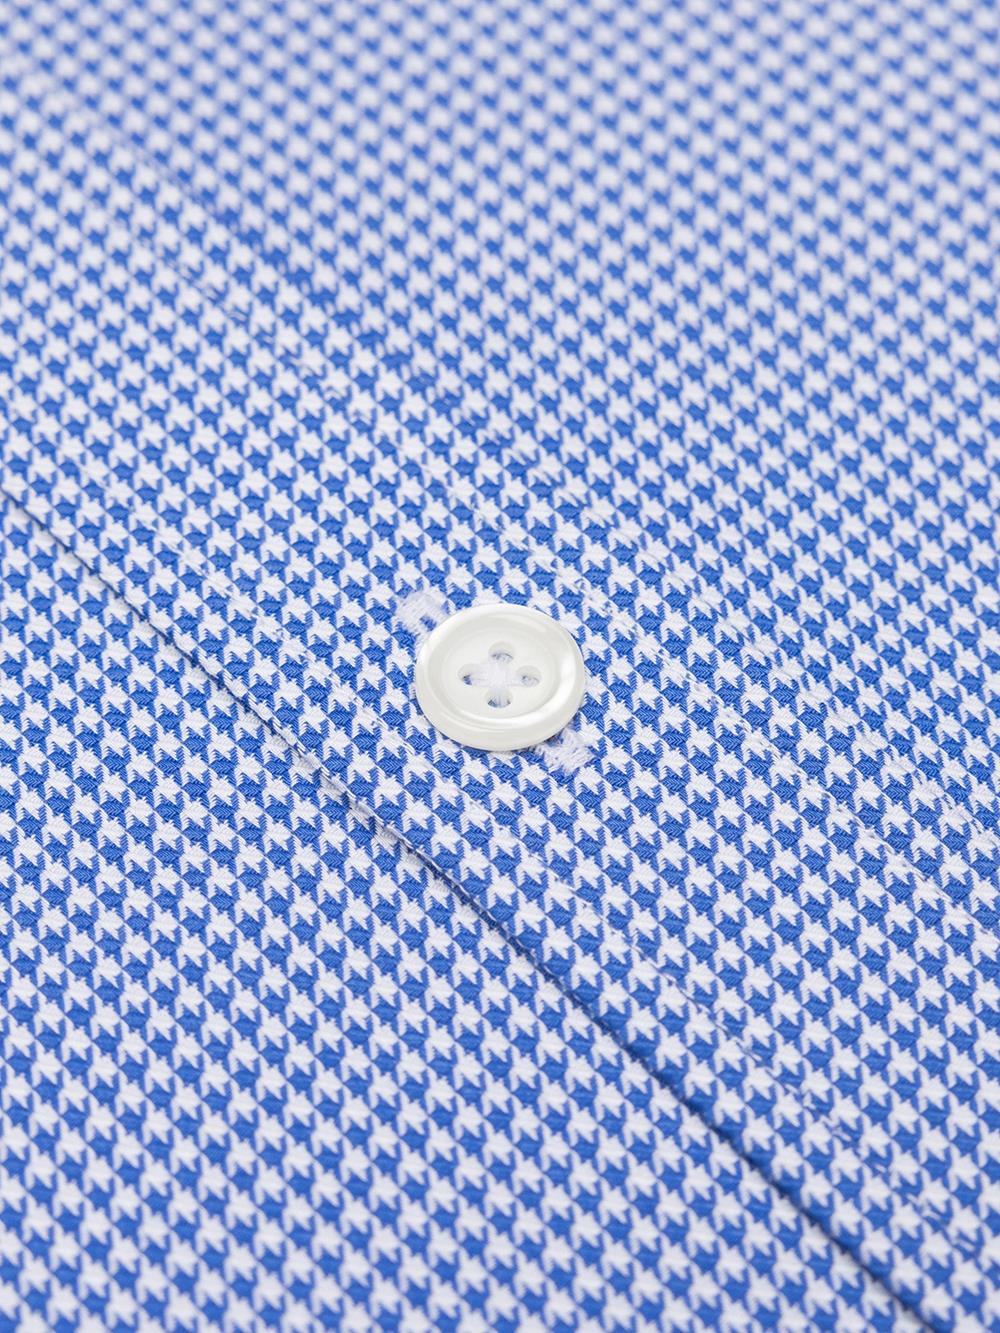 Landry blue gingham slim fit shirt - Button down collar